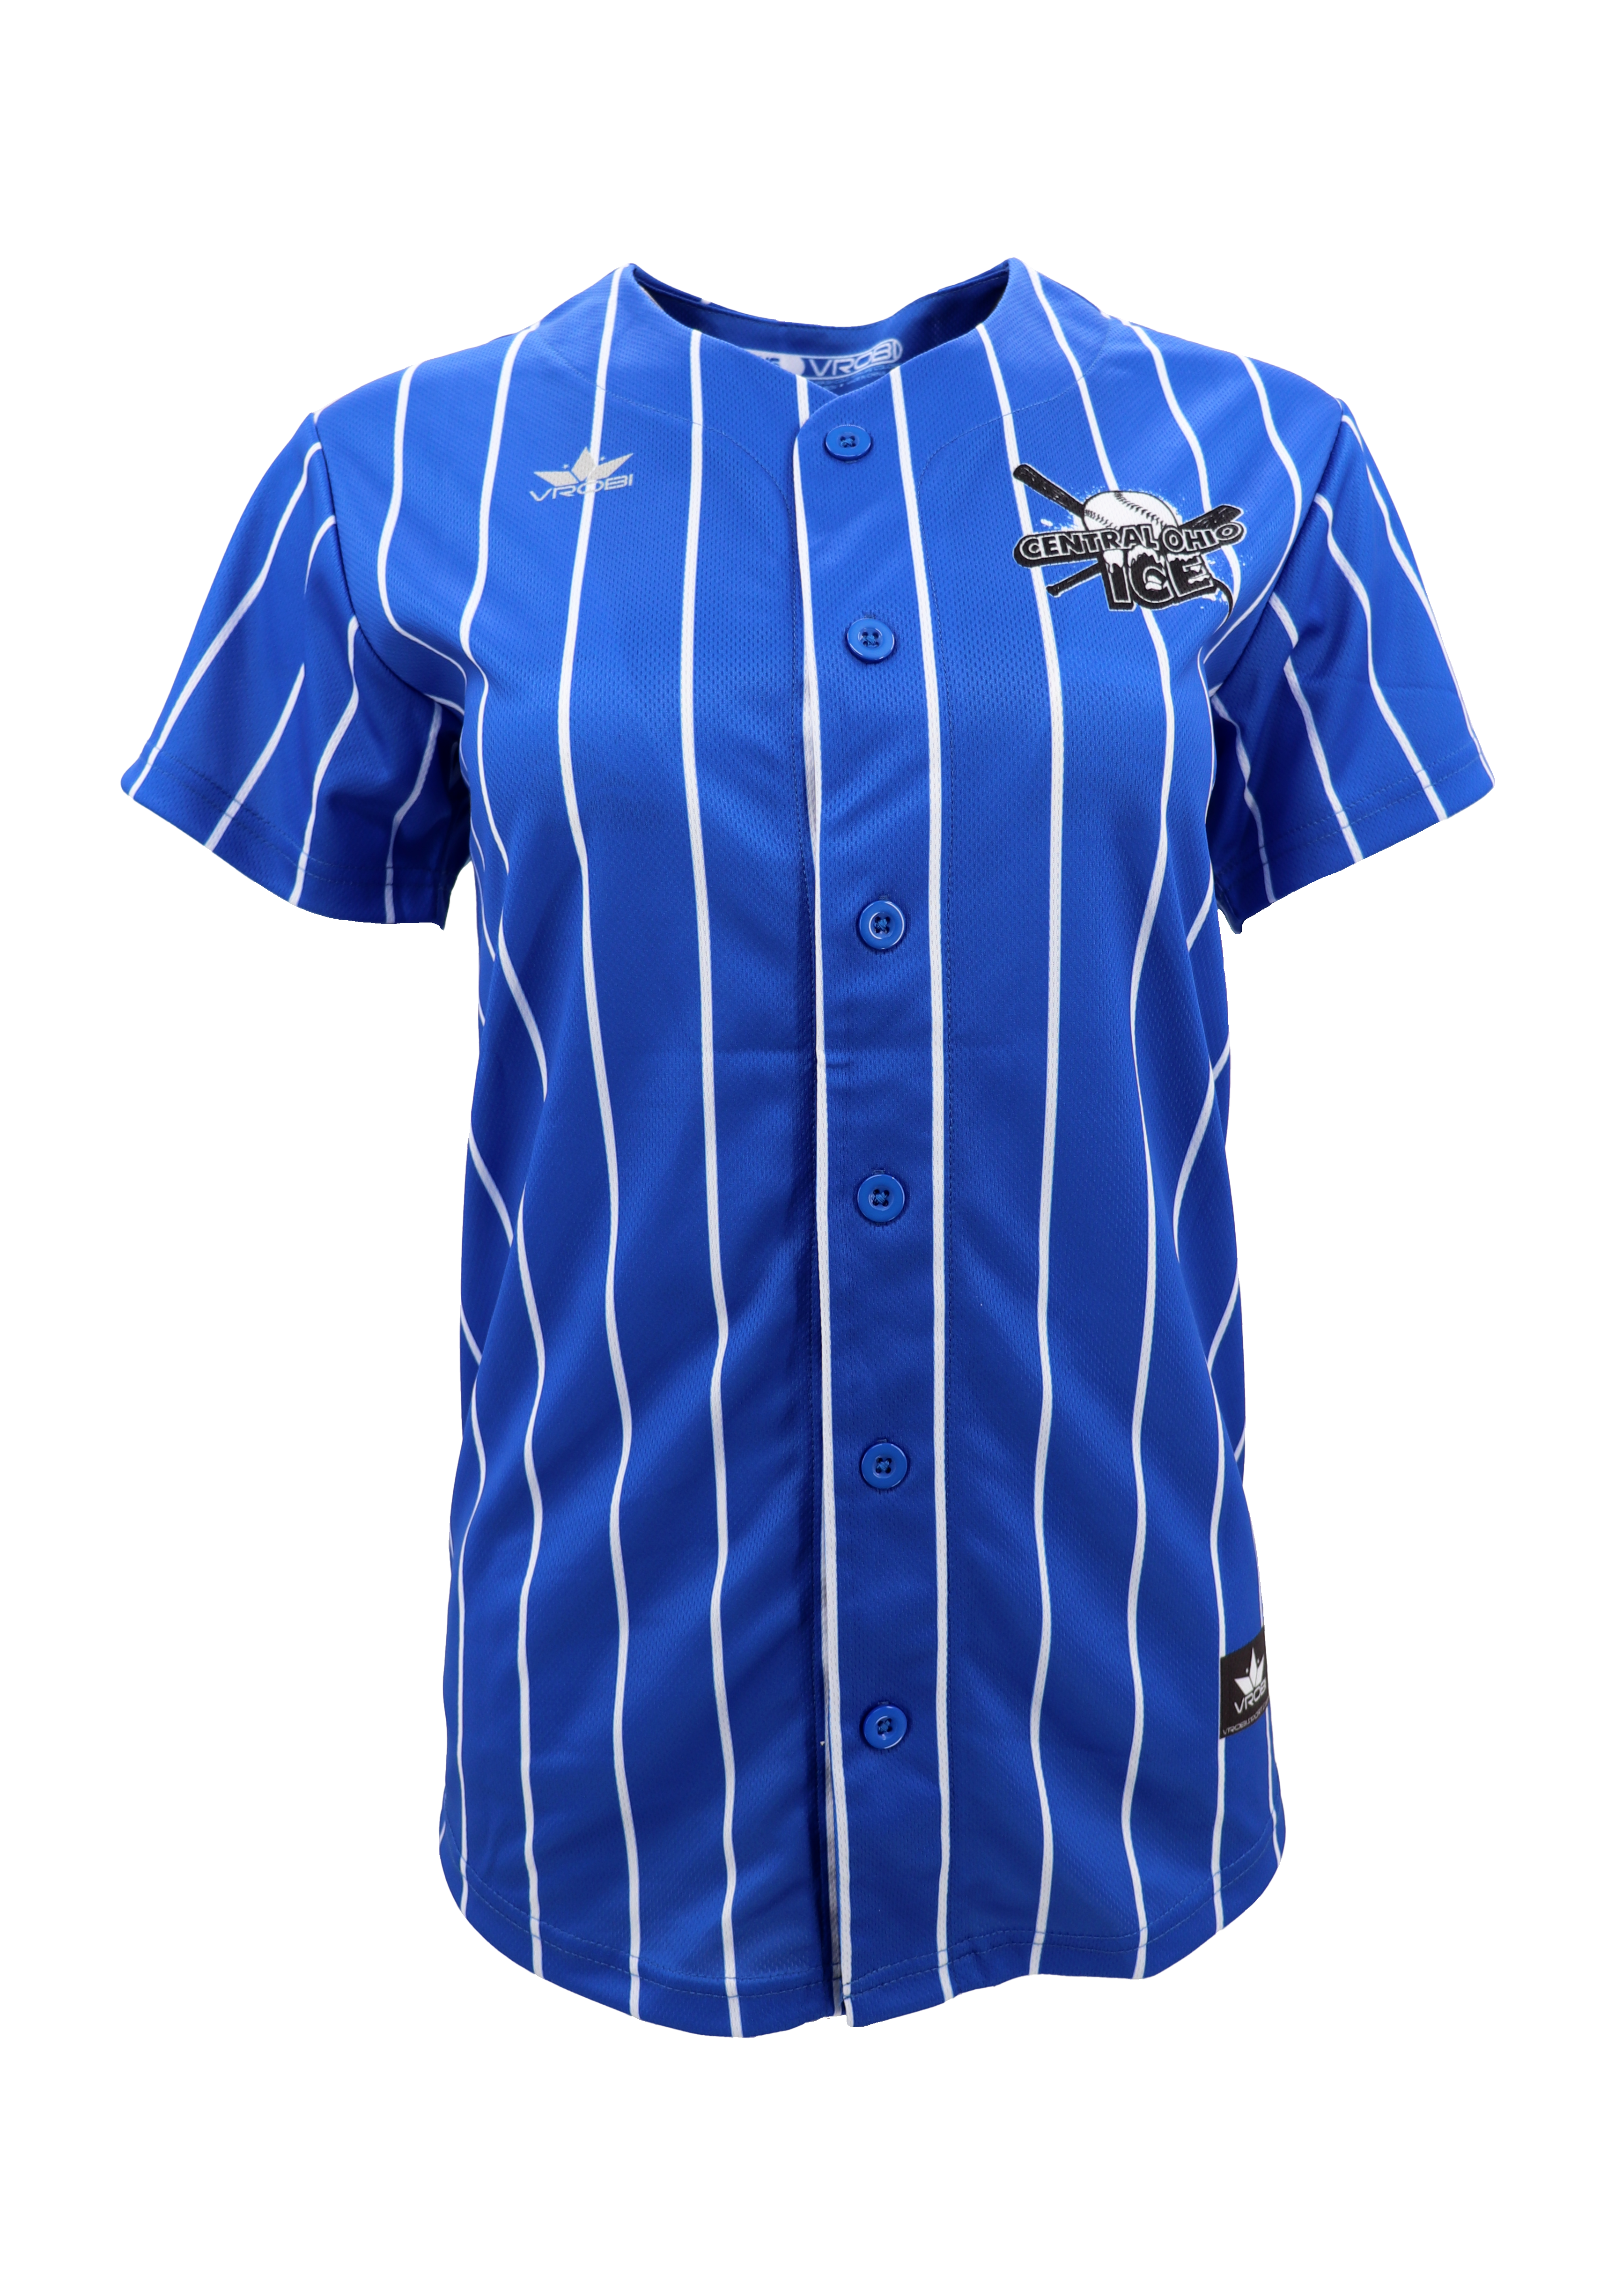 Full-Sublimation Custom Softball Uniforms